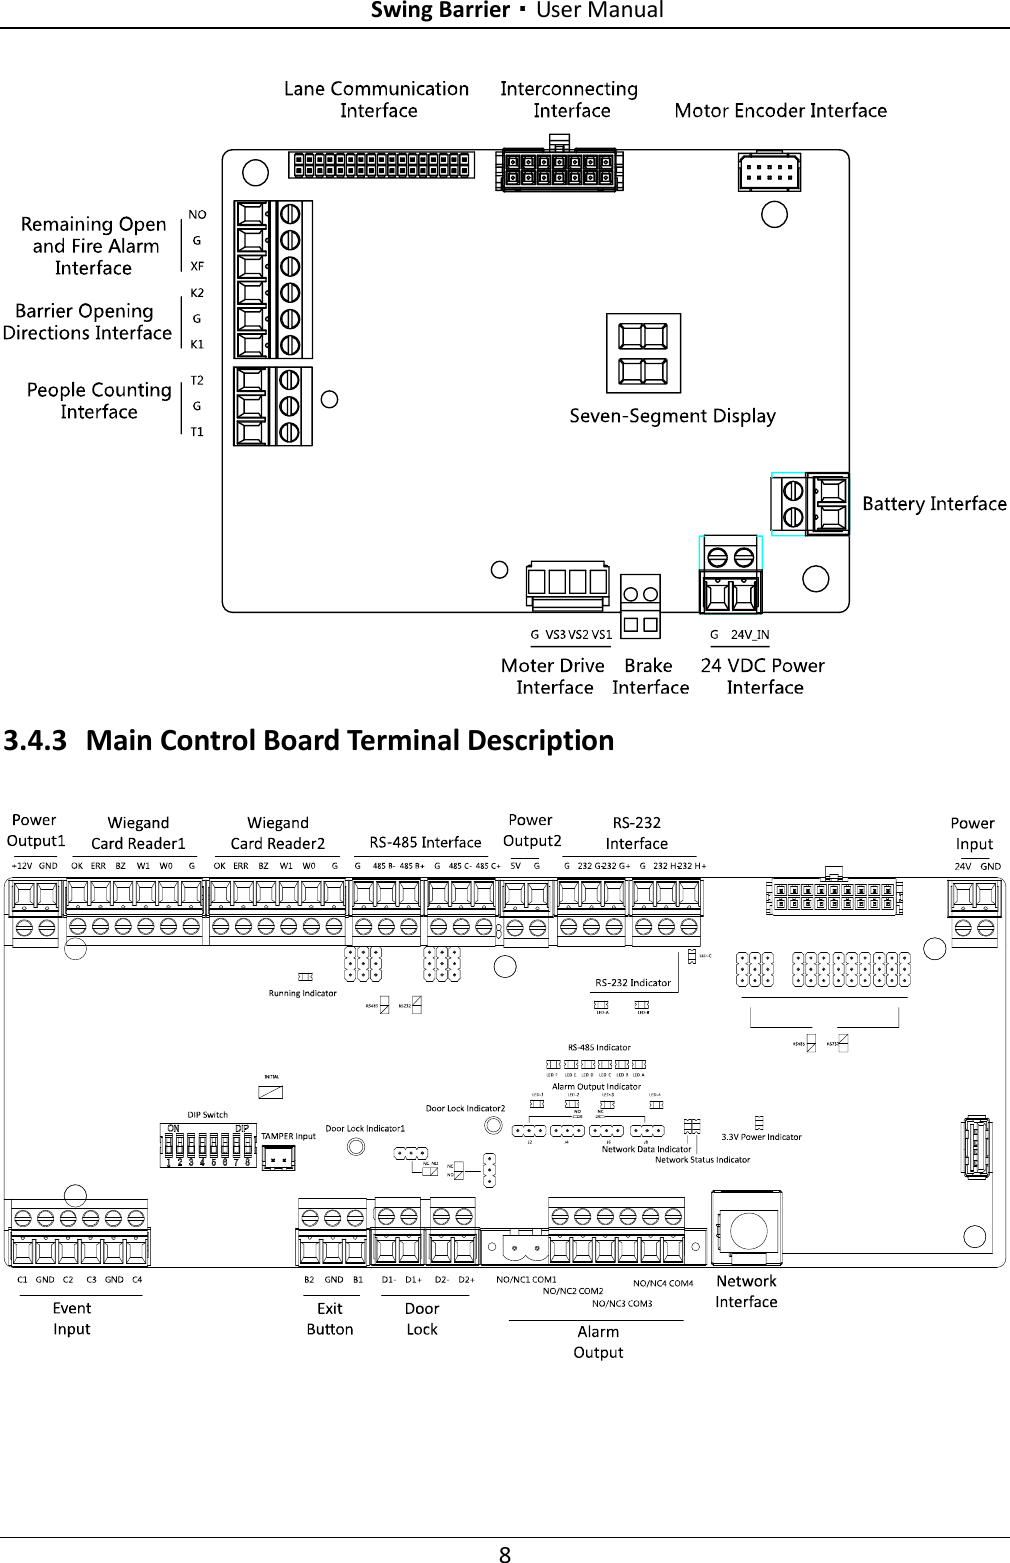 Swing Barrier·User Manual 8  3.4.3 Main Control Board Terminal Description   